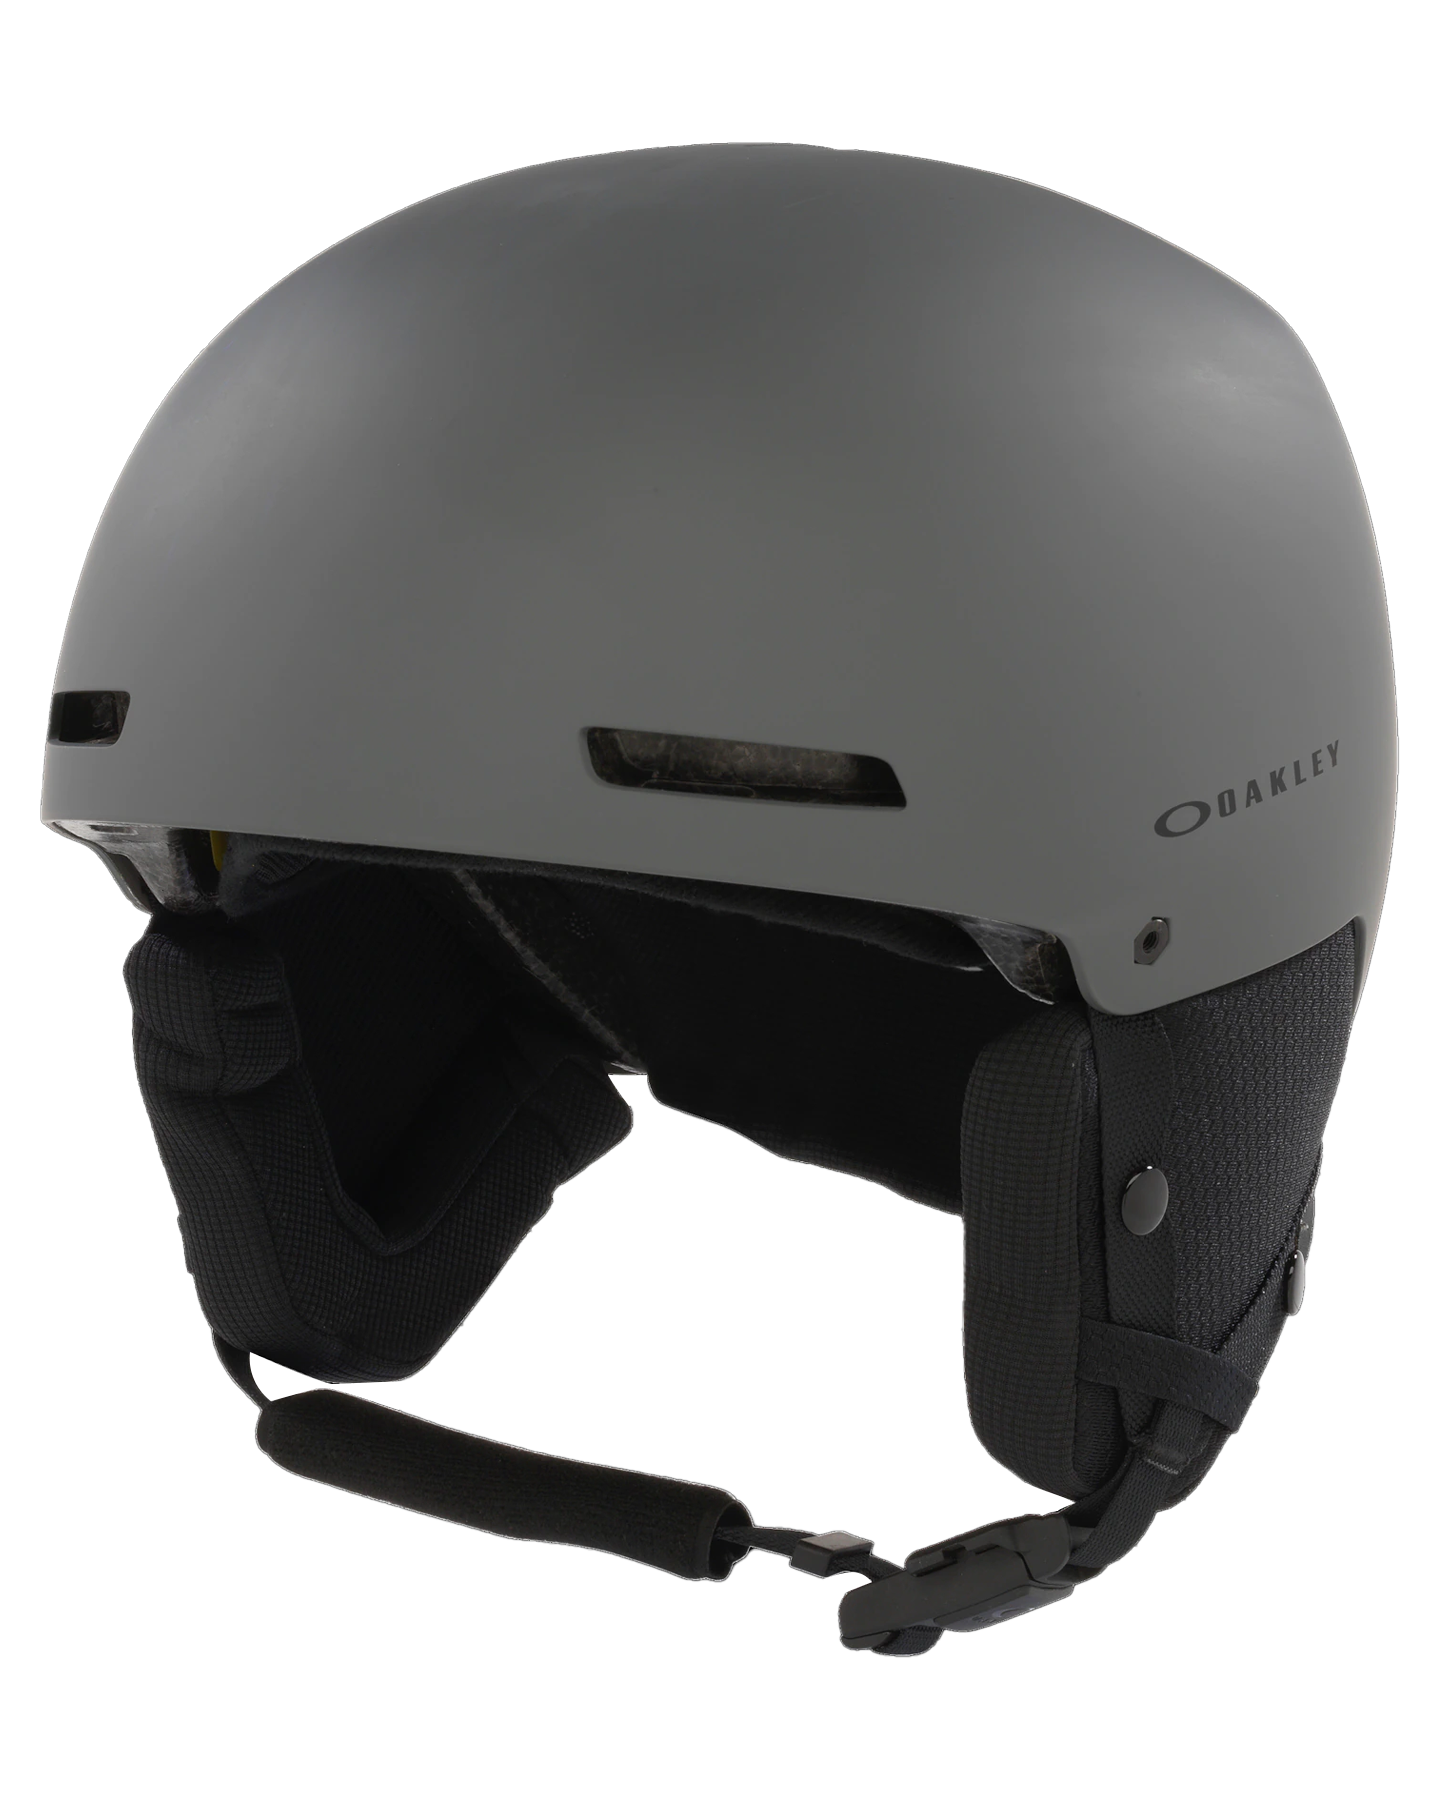 Oakley Mod1 Pro Snow Helmet - Forged Iron Men's Snow Helmets - SnowSkiersWarehouse